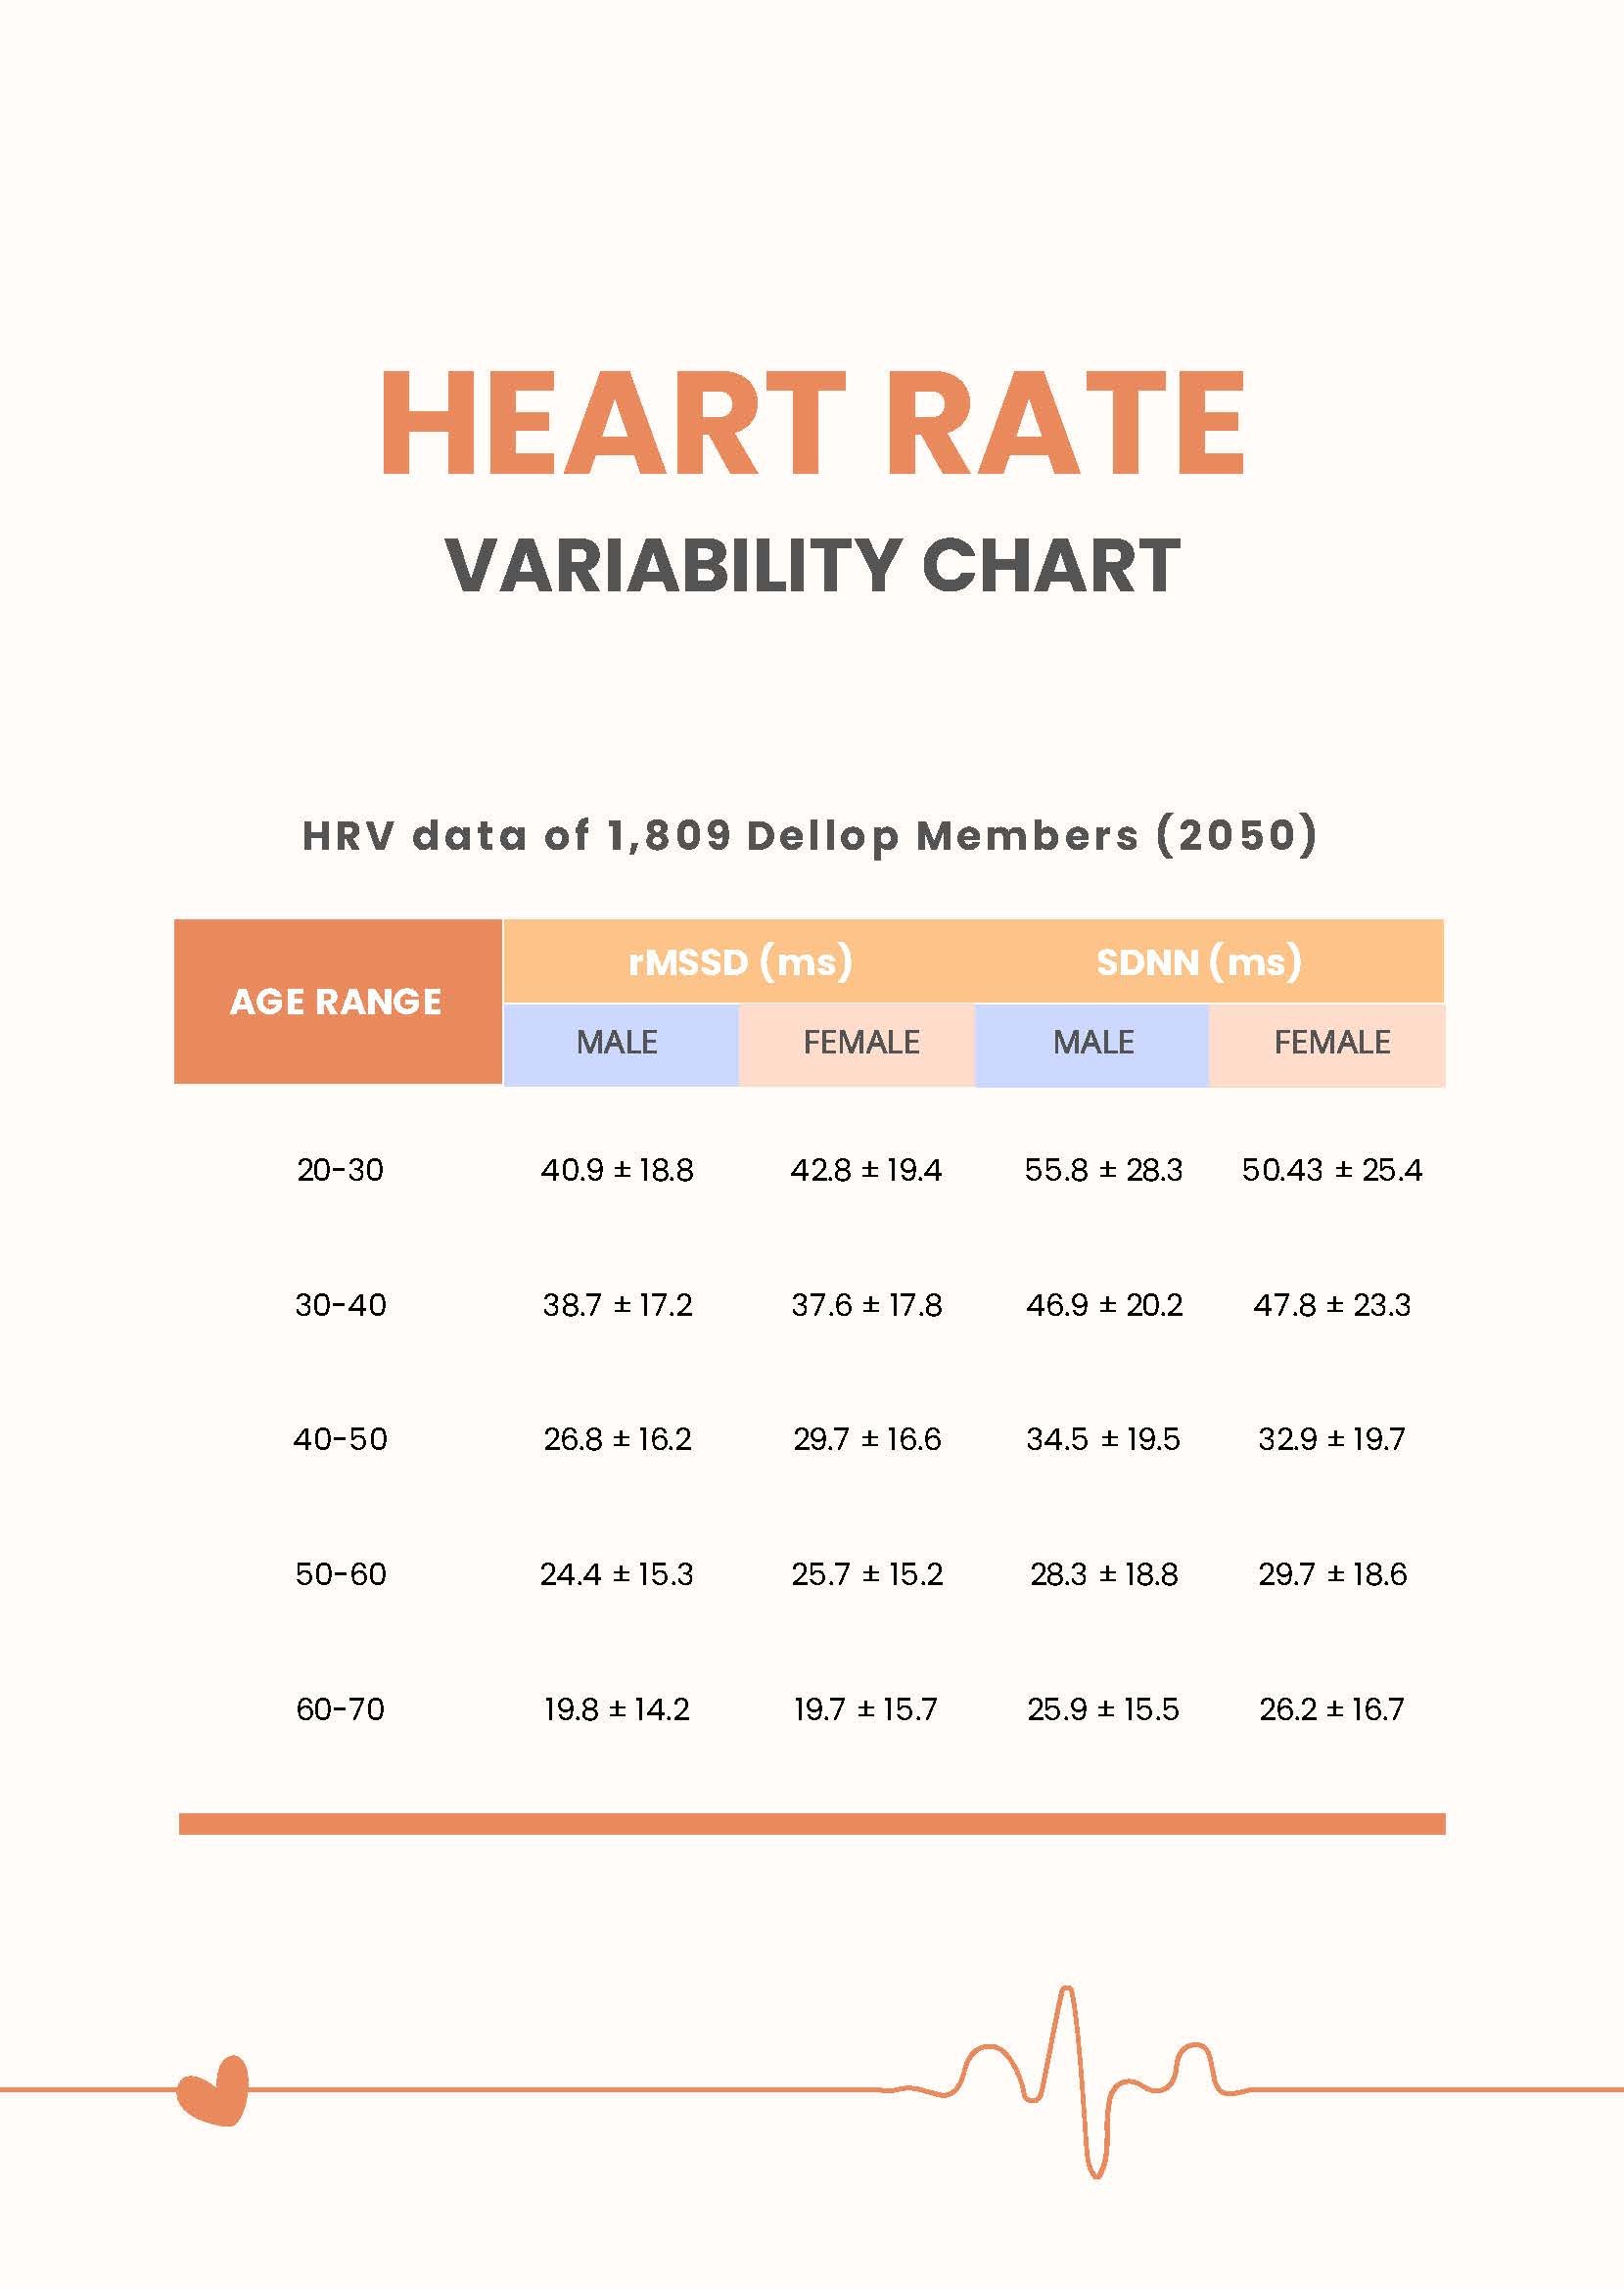 Fetal Heart Rate Gender Chart